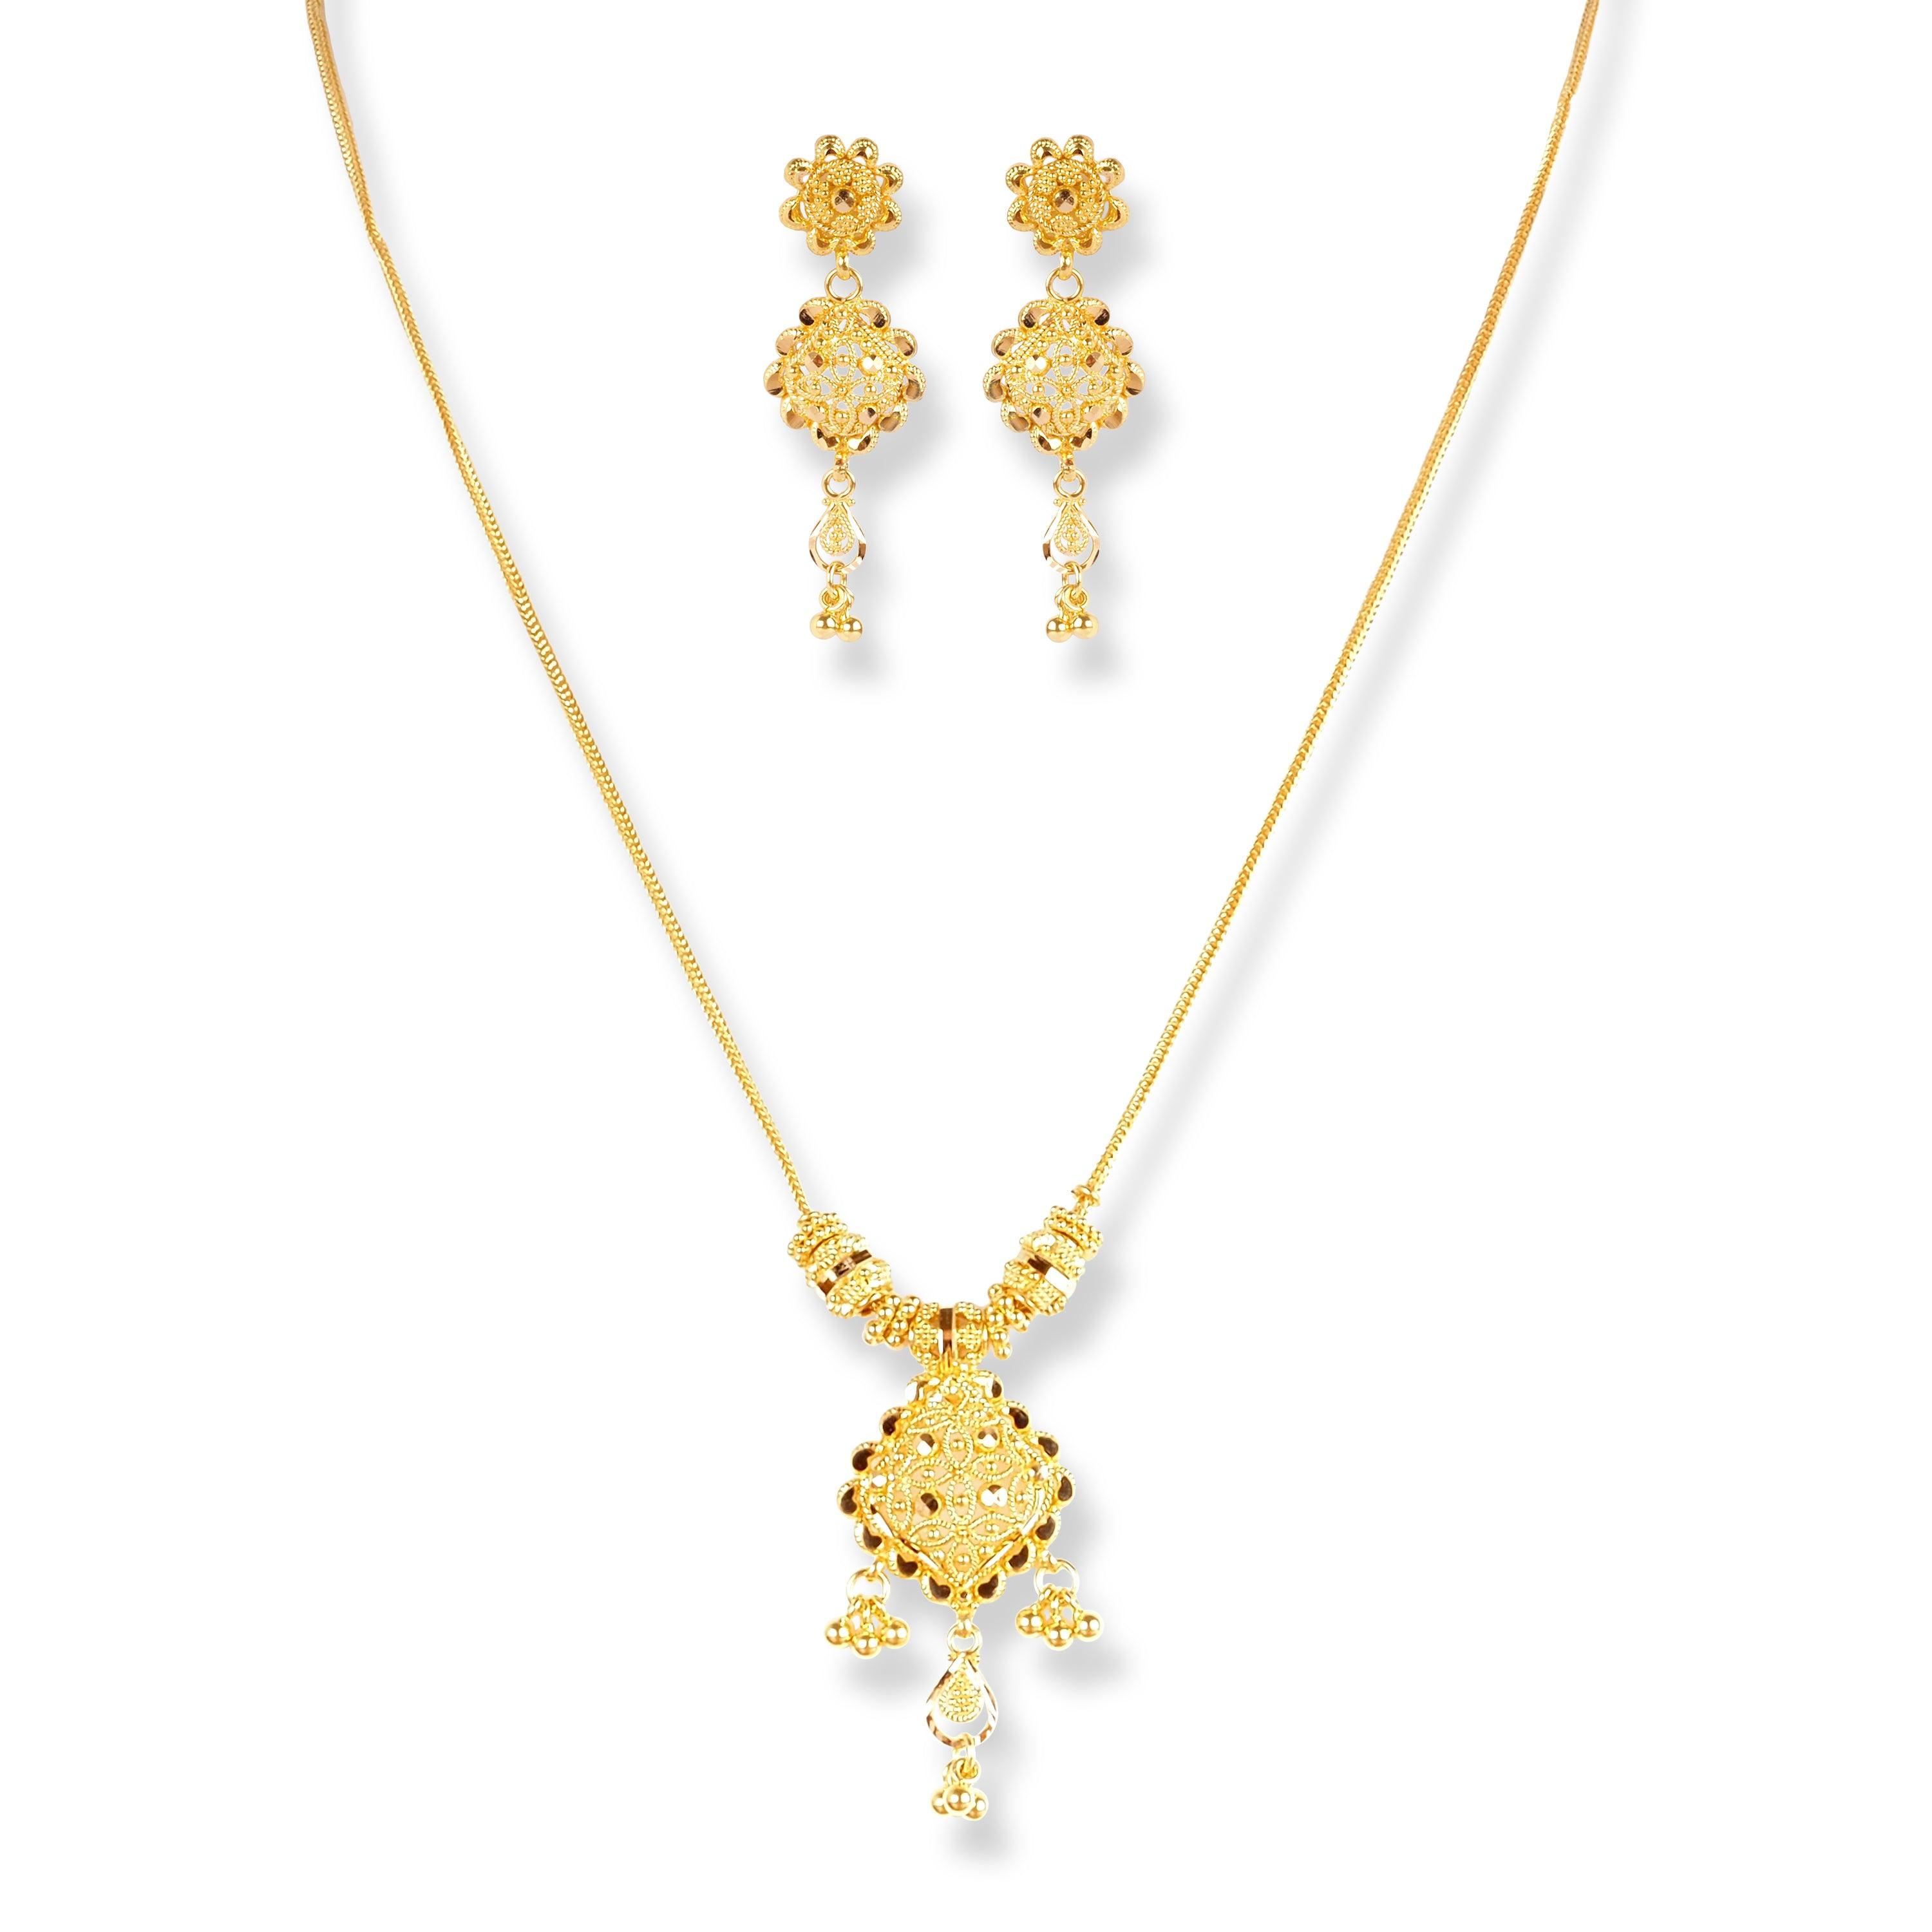 22ct Gold Set with Filigree Work N-7920 - Minar Jewellers